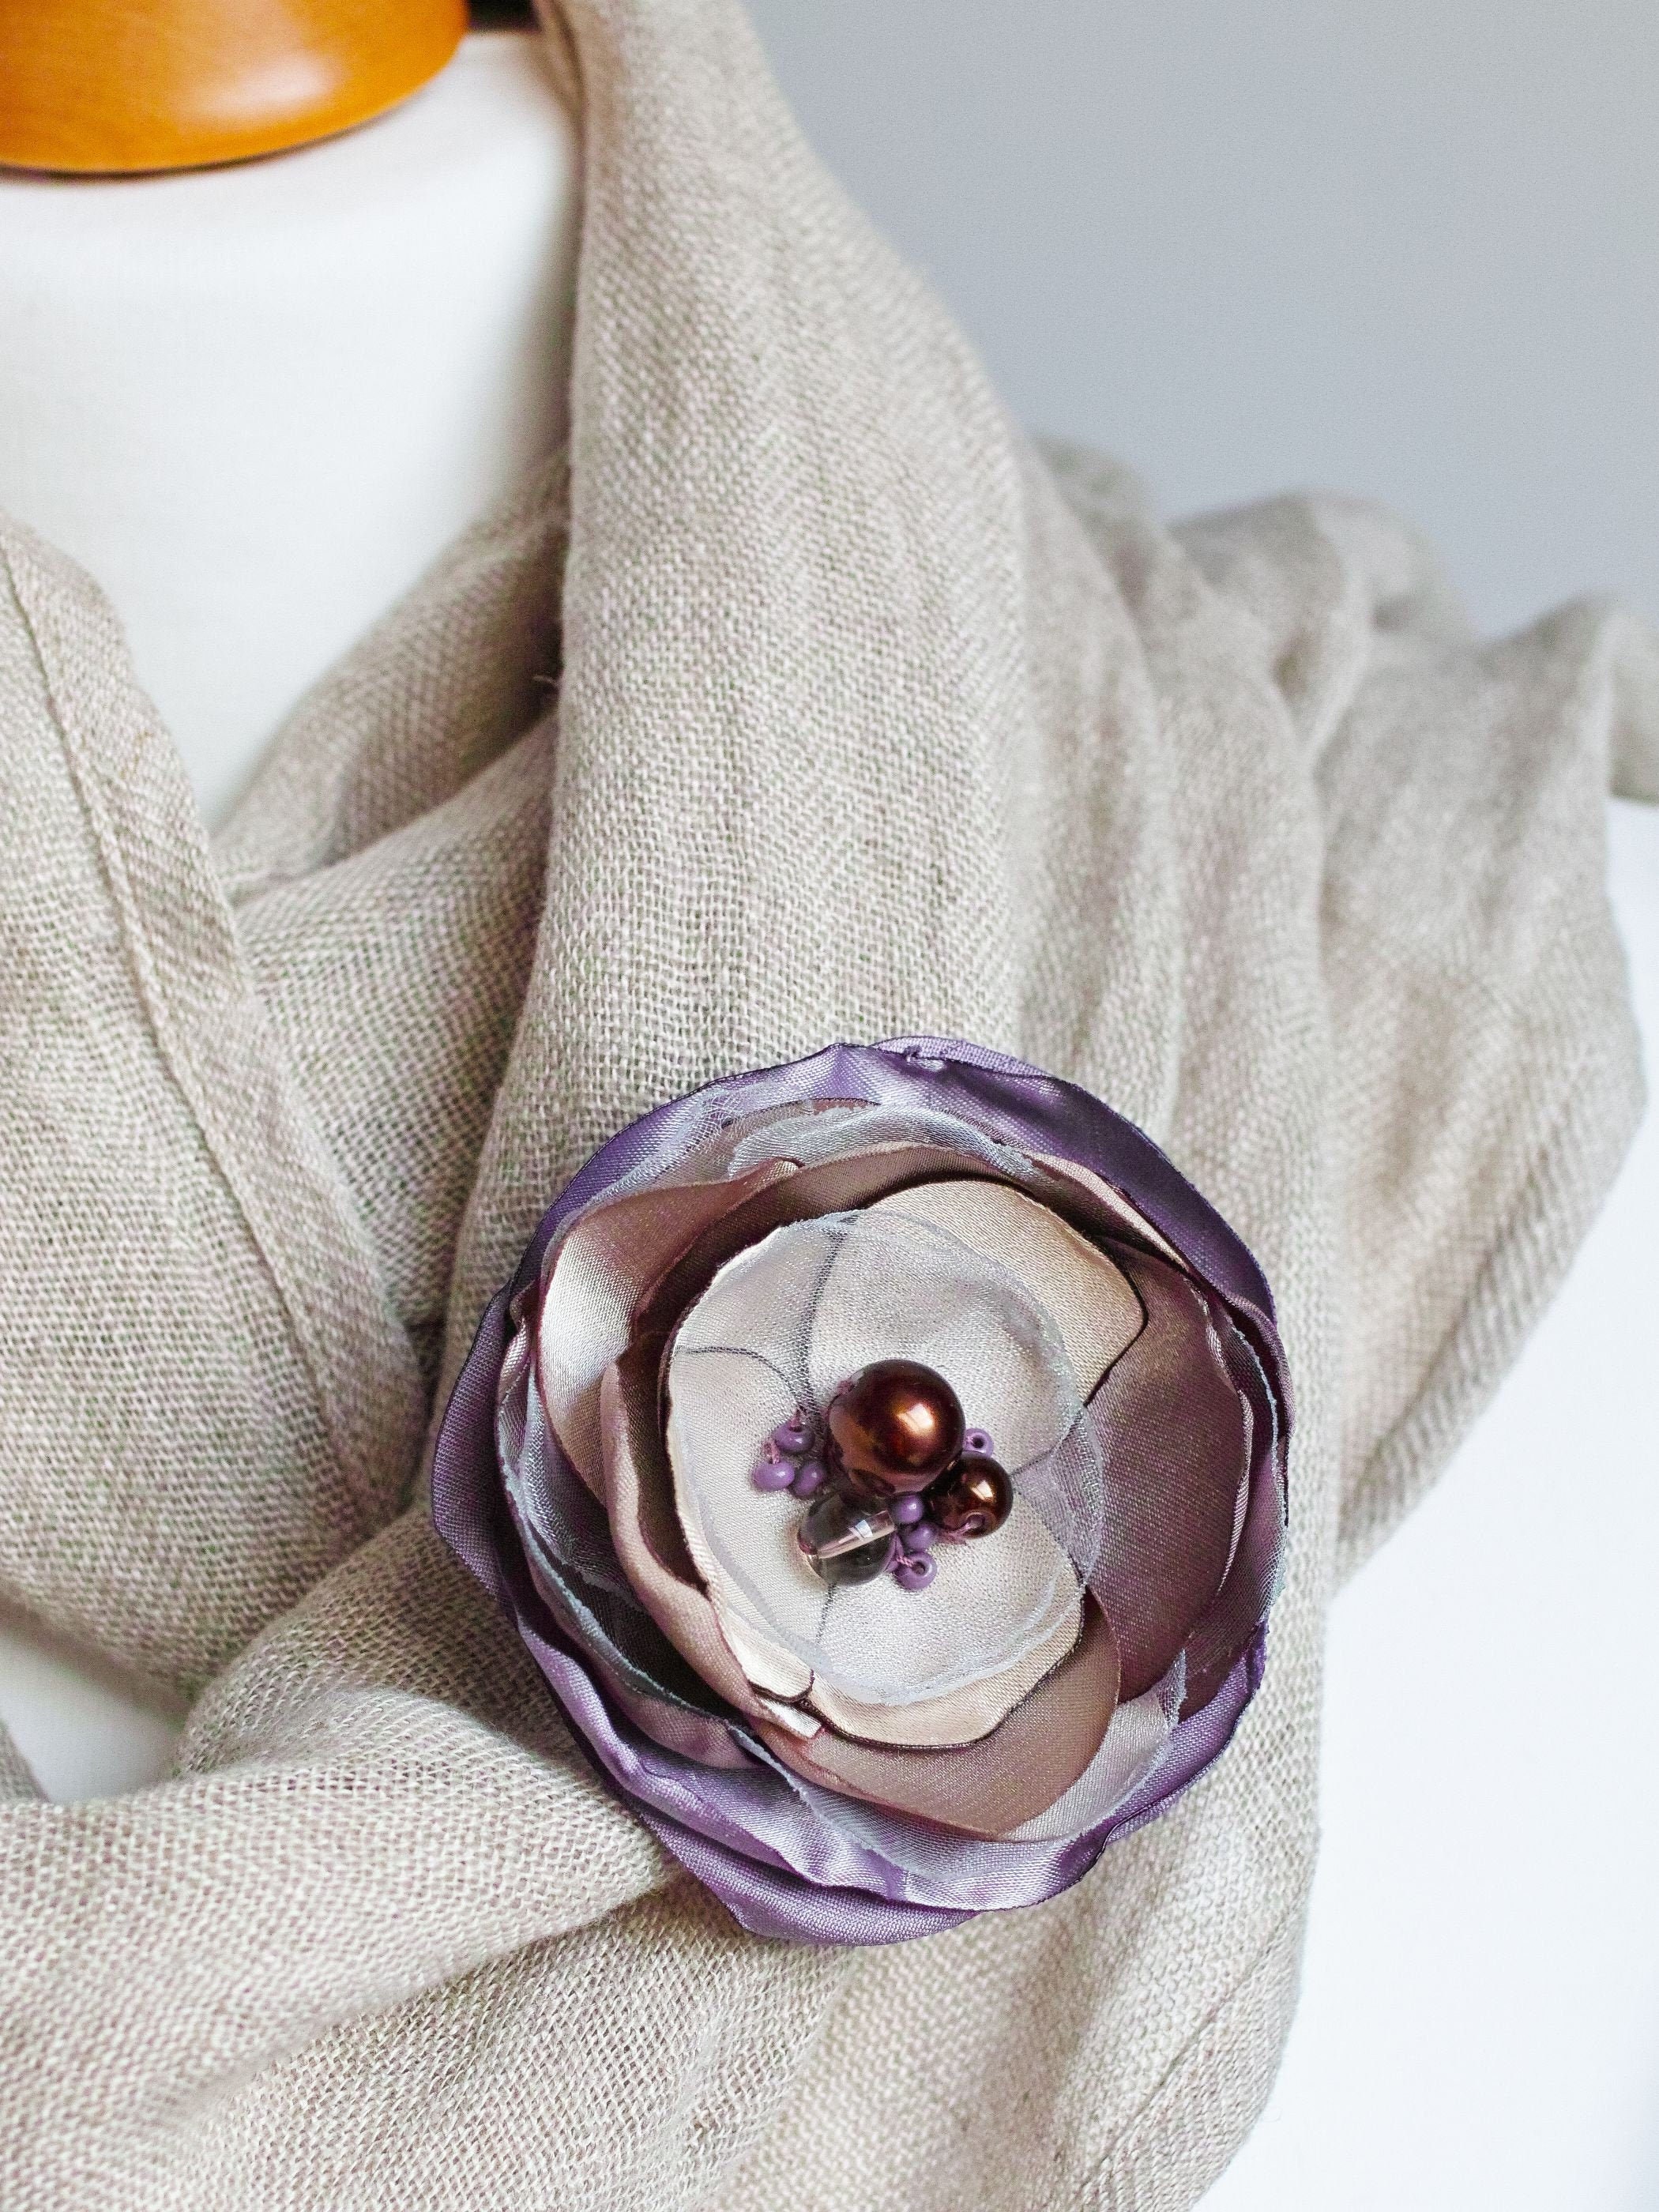 Textile fabric flower BROOCH for women, Pin Petal Flower Pin